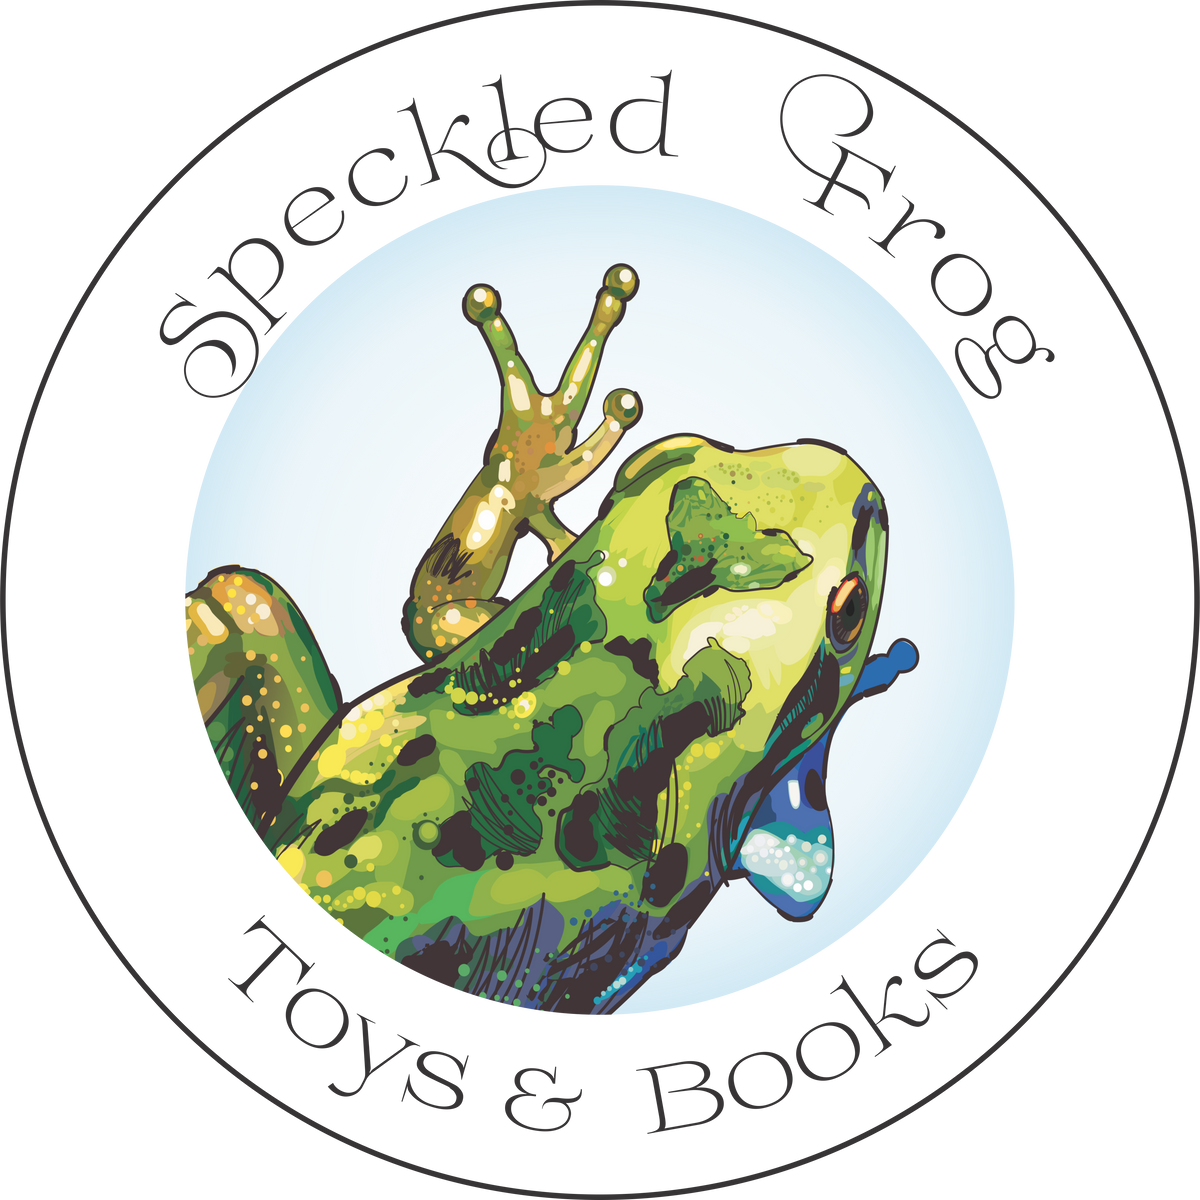 Speckled Frog Toys & Books